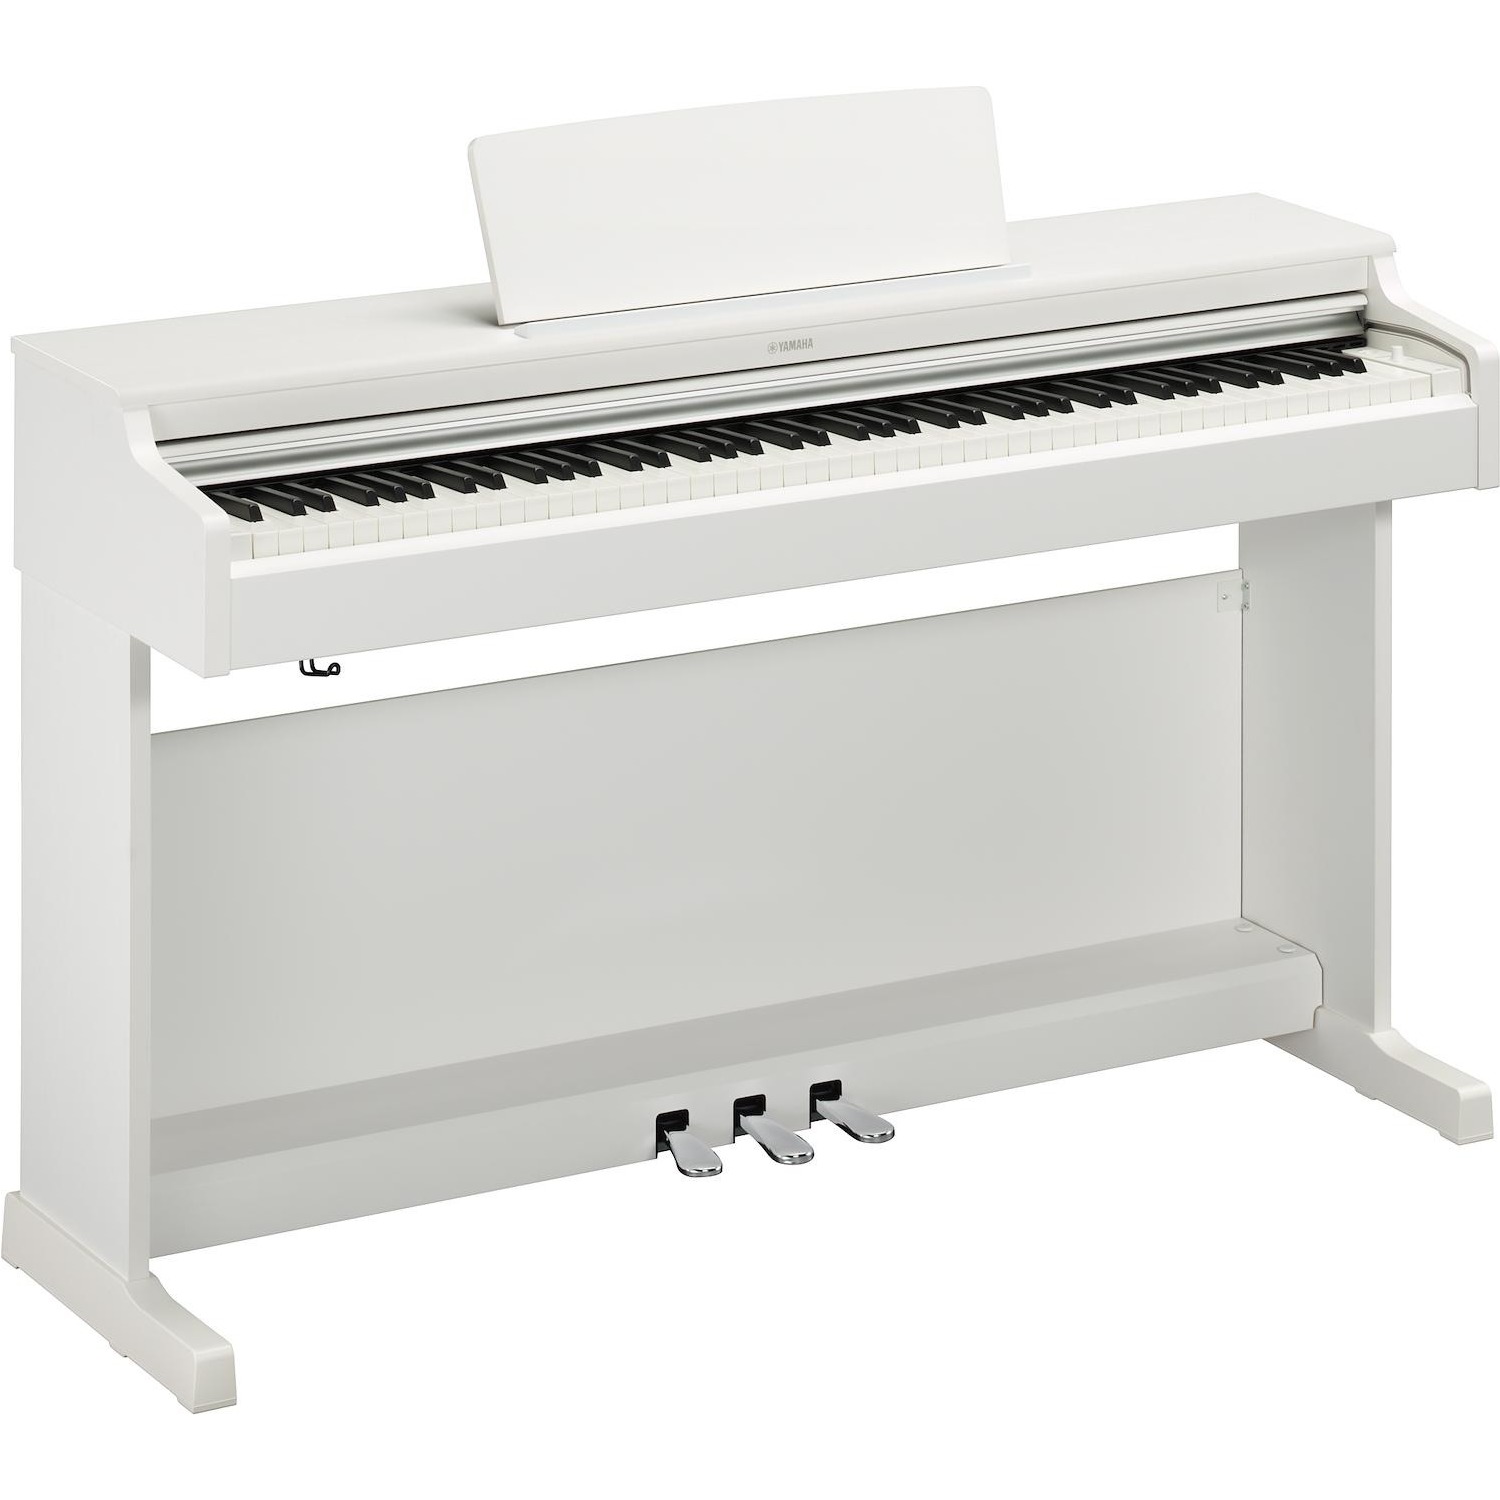 Immagine per Pianoforte digitale Yamaha YDP 165 Arius White da DIMOStore